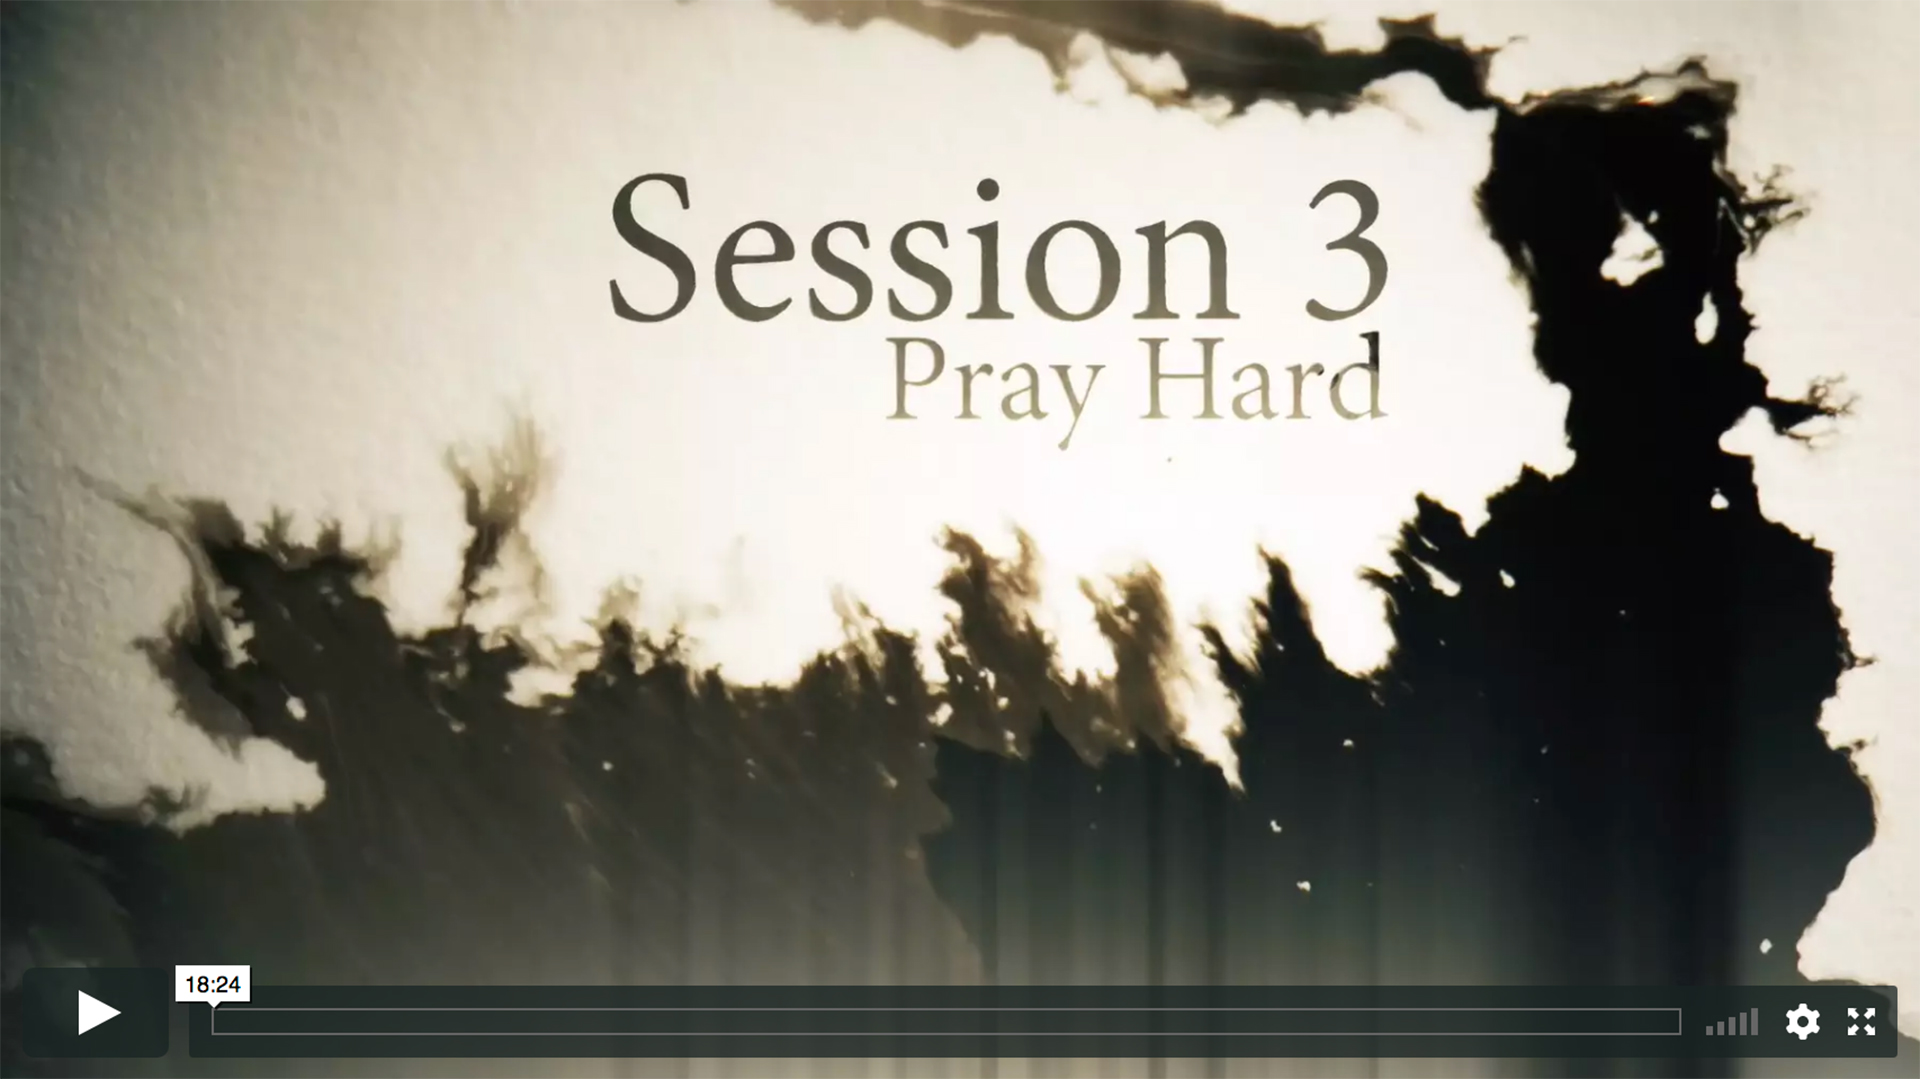 Session 3 - Pray Hard